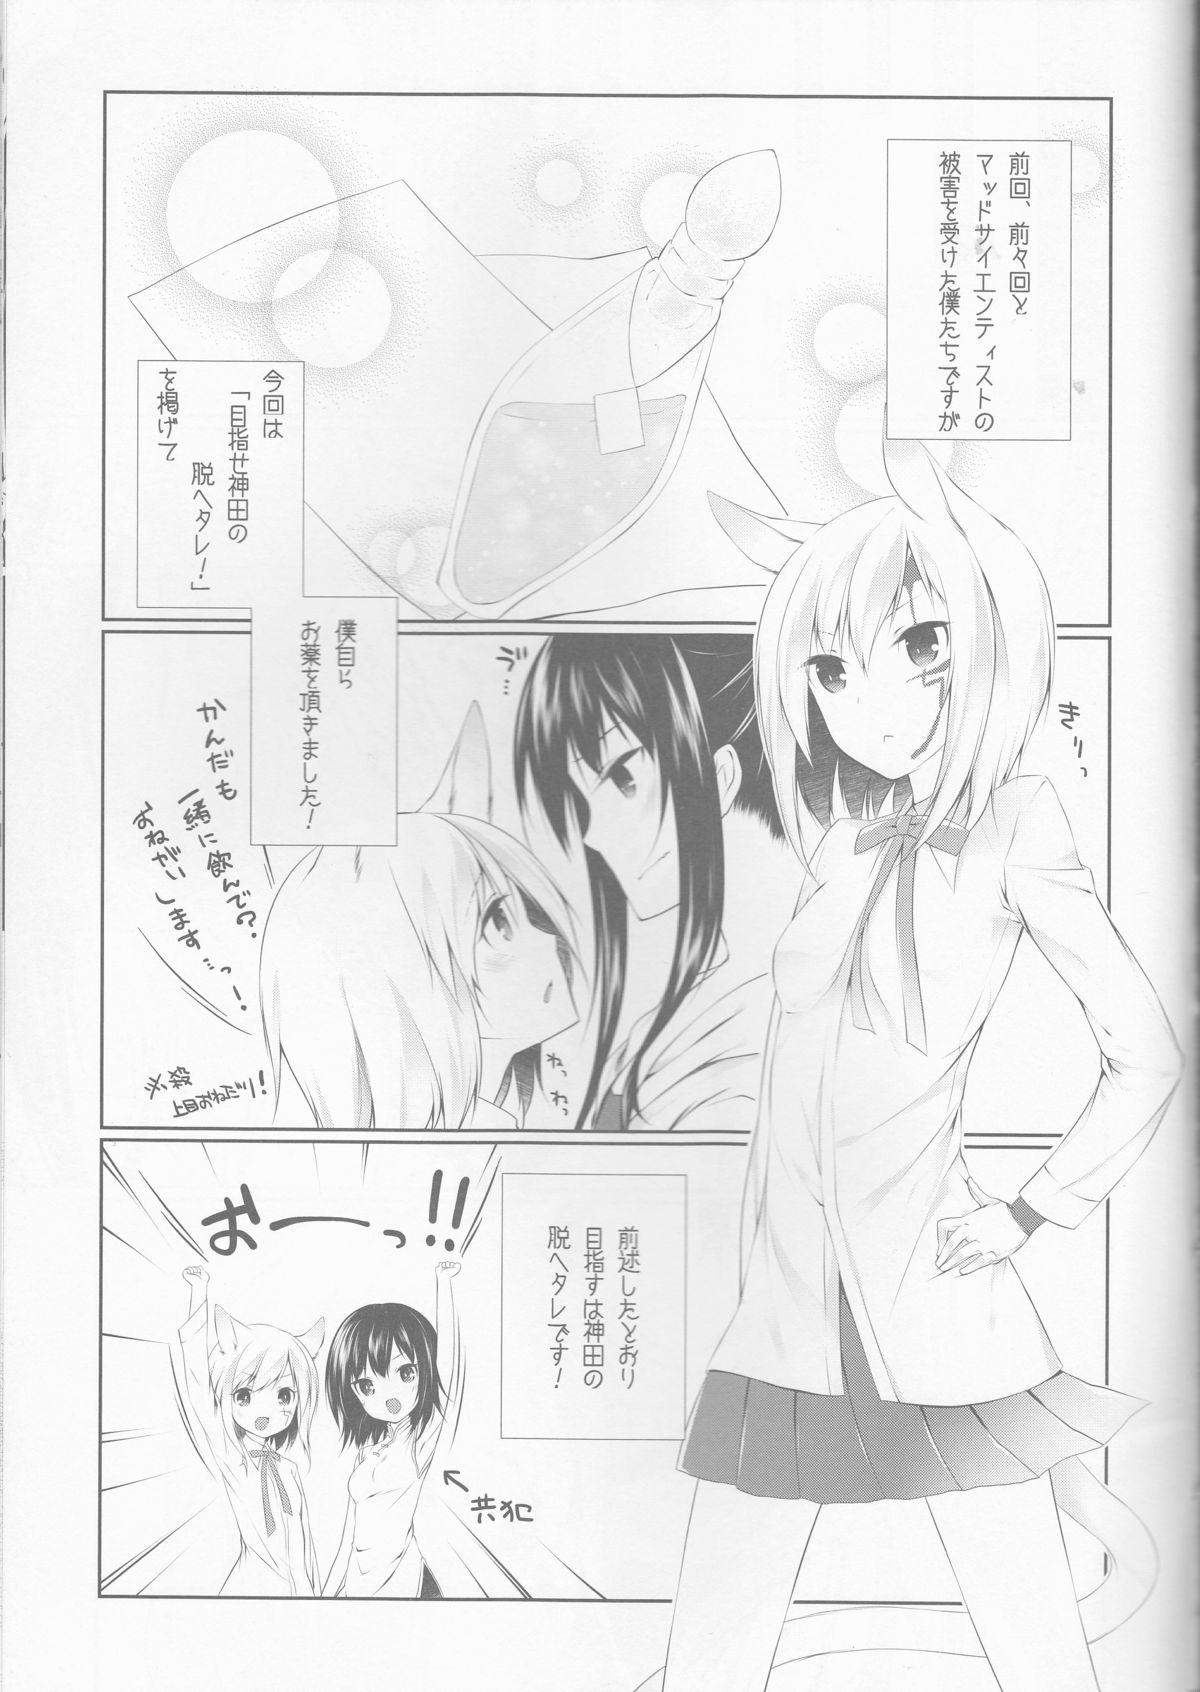 Head Yokubari Sweet Angel Betsubara! - D.gray man Real Couple - Page 5